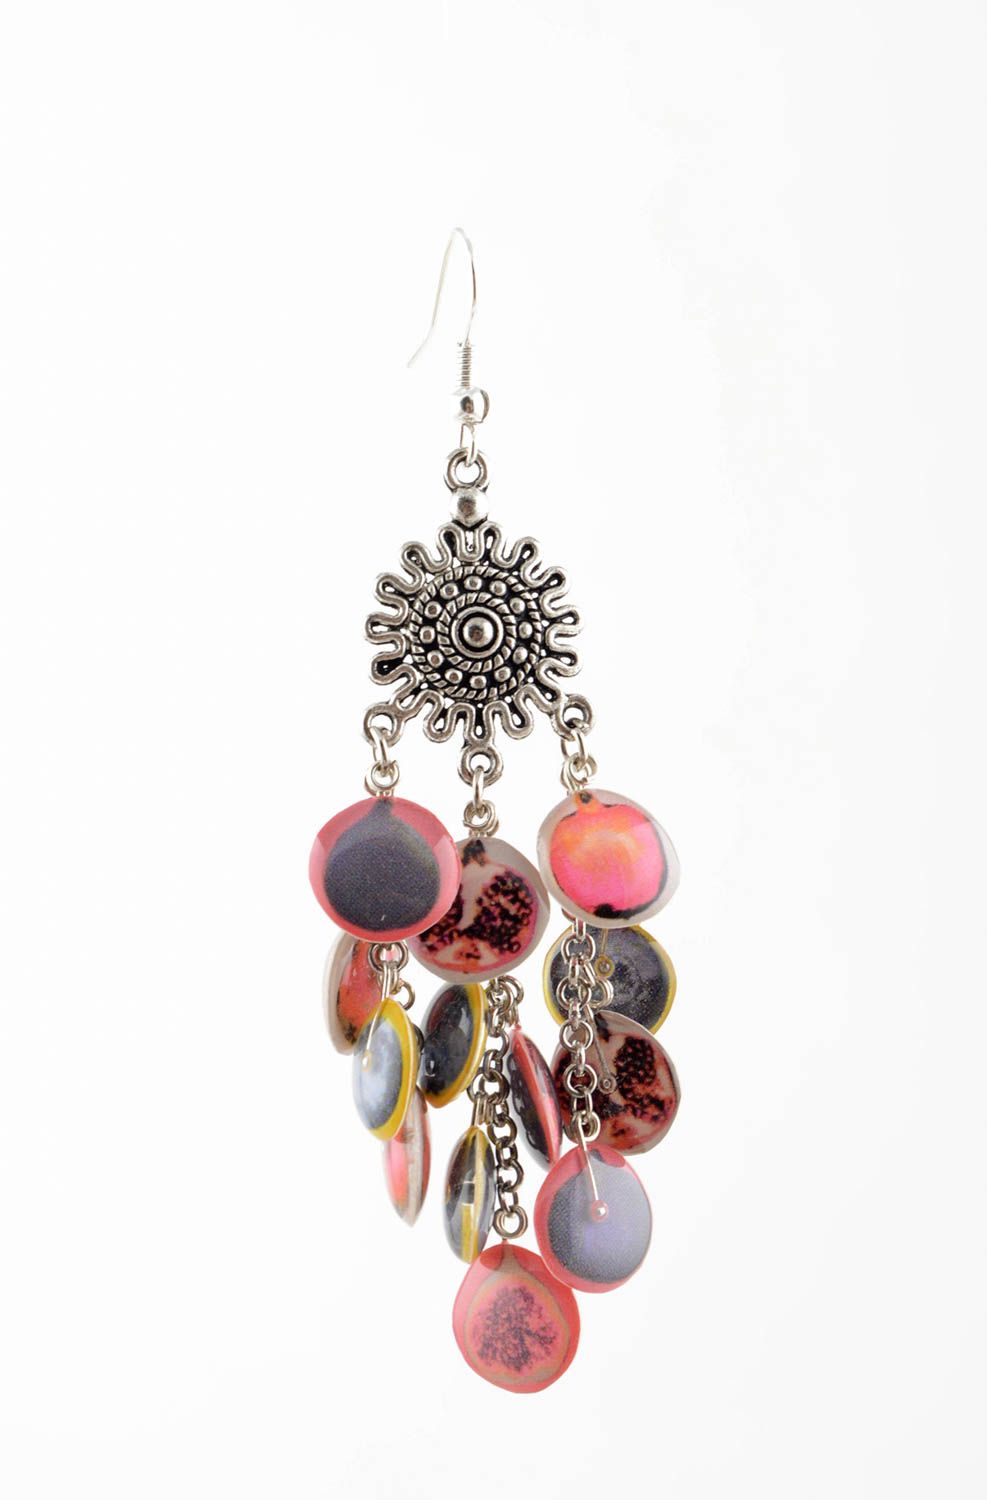 Long earrings metal jewelry dangling earrings handmade jewellery gifts for her photo 1